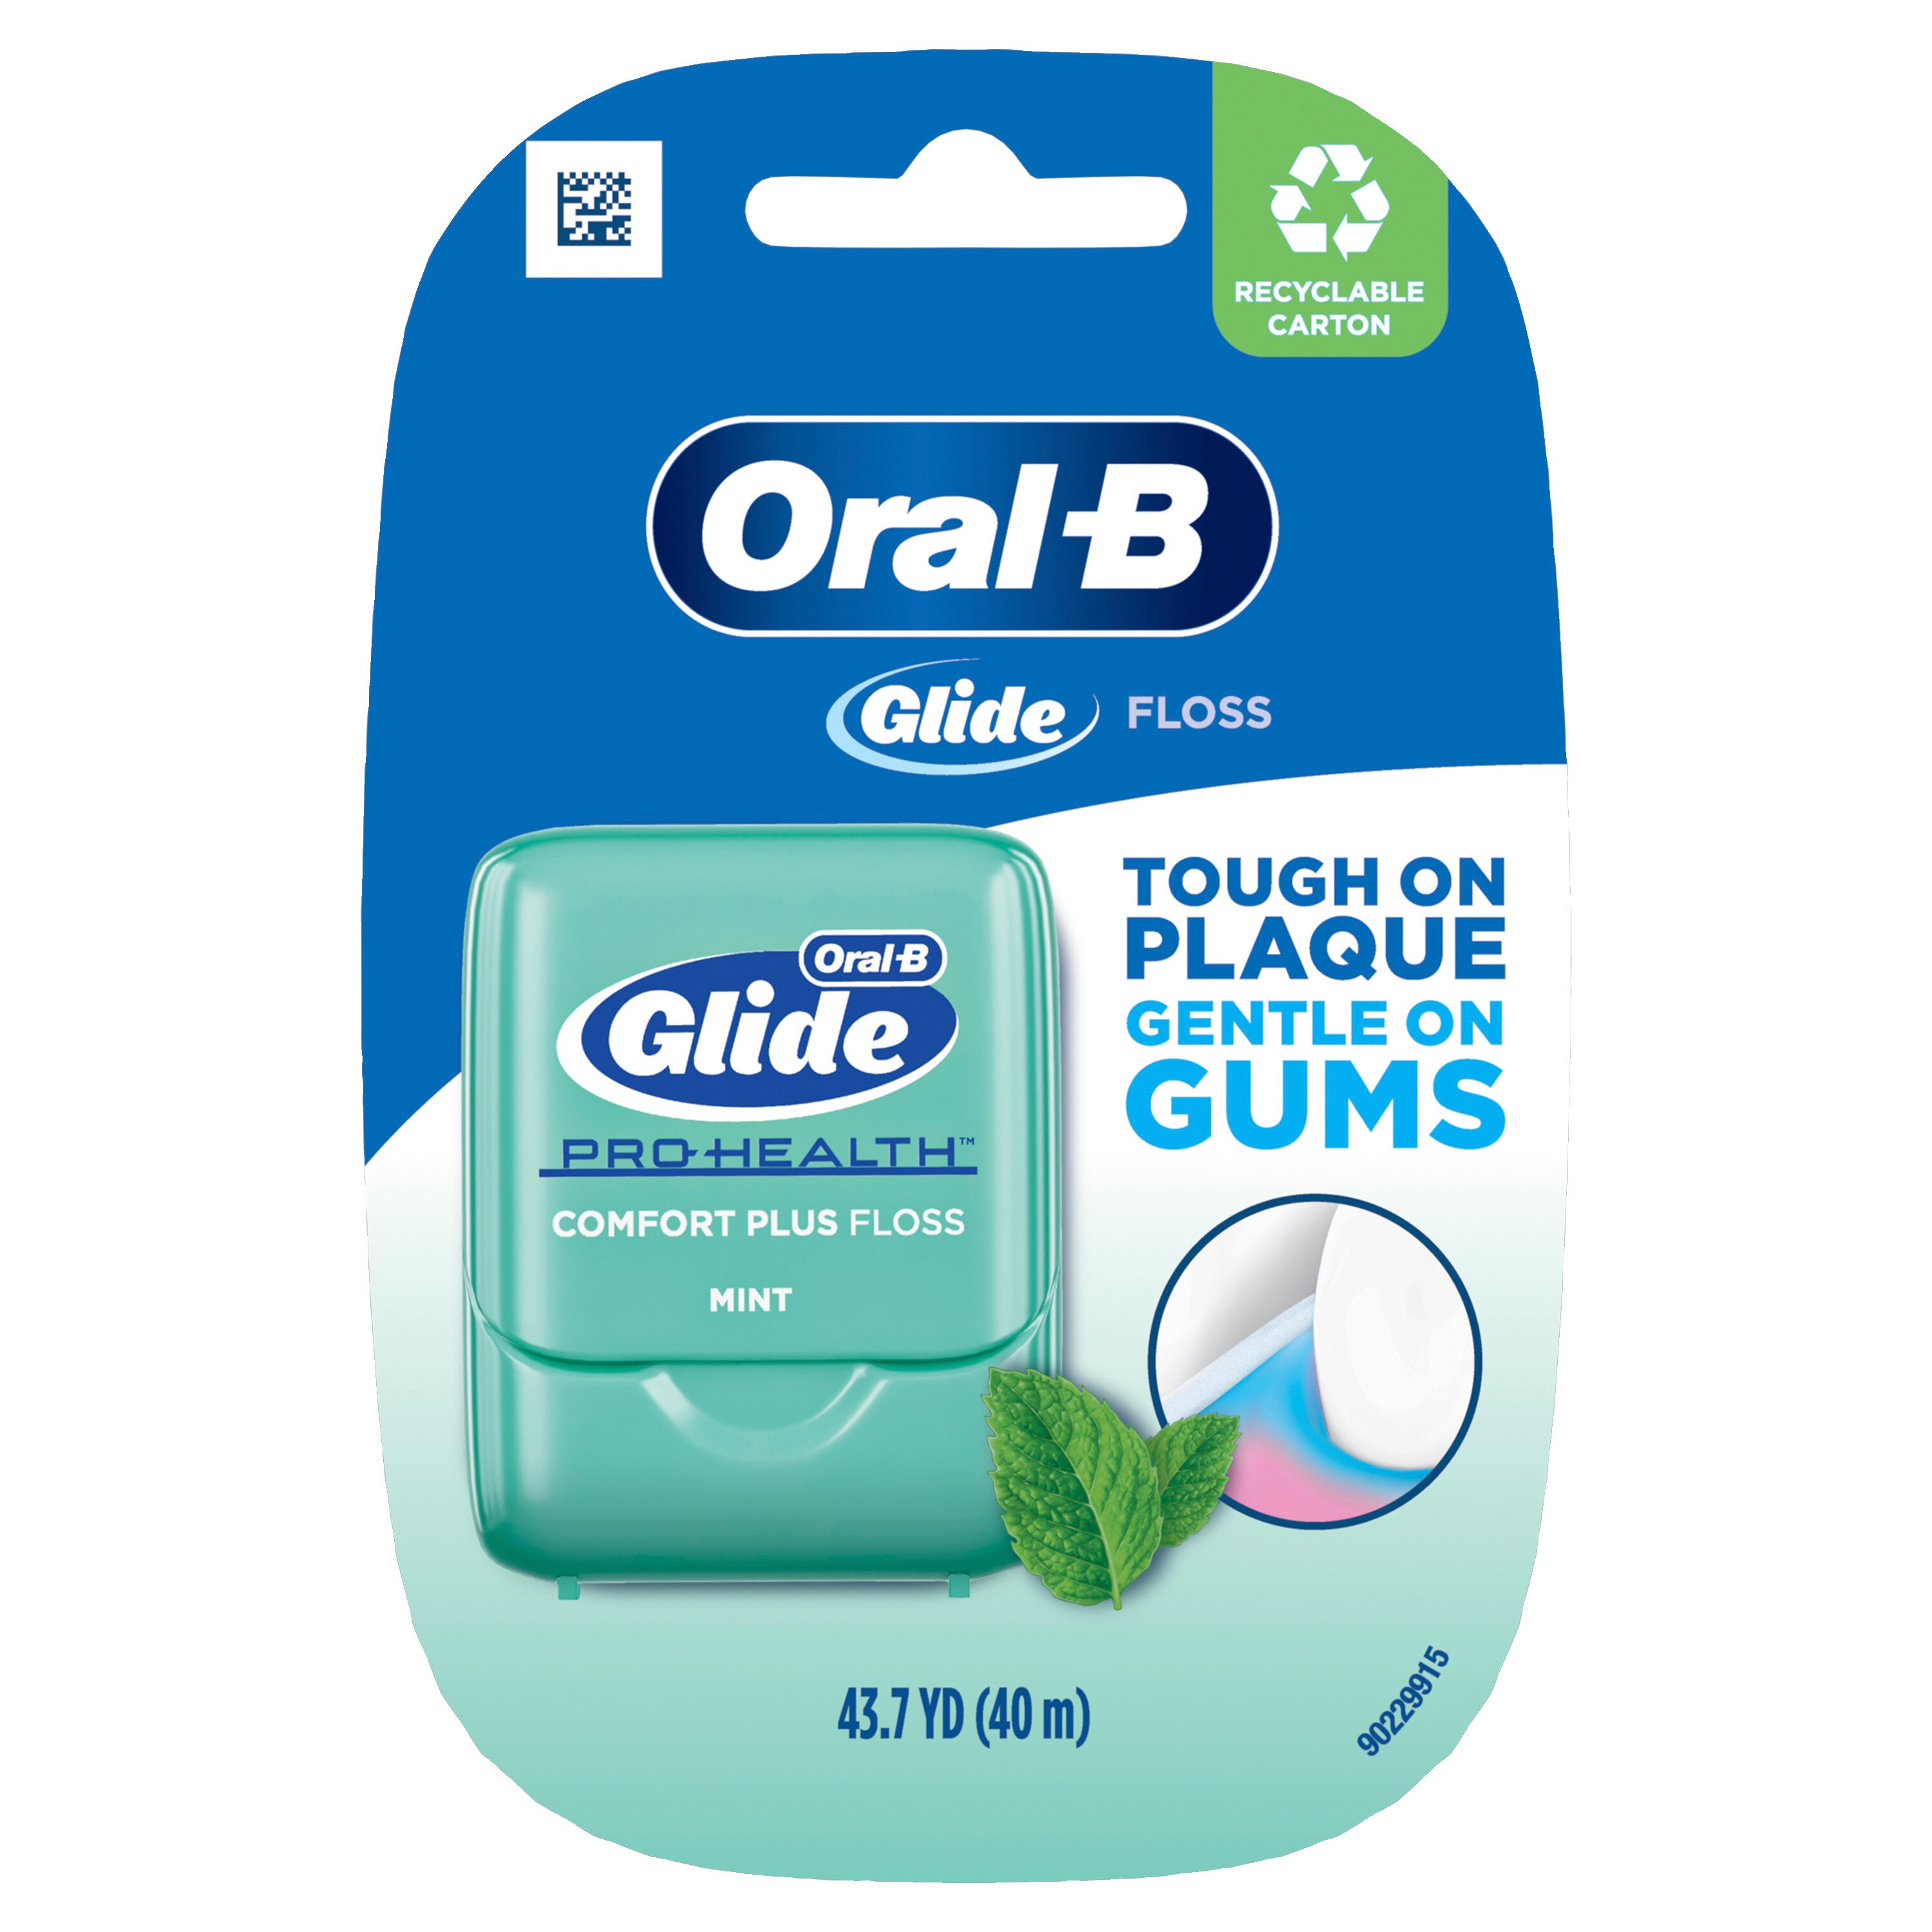 Oral-B Glide Pro-Health Comfort Plus Floss, Mint, 40 M - 43.7 Yd , CVS